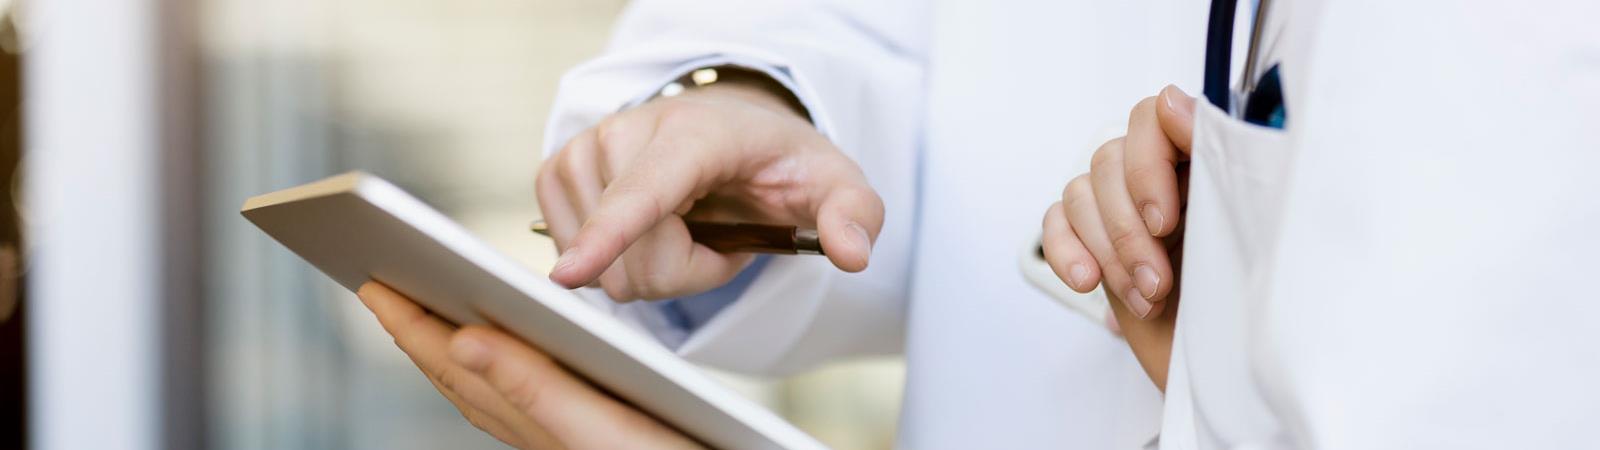 Doctor hands on tablet